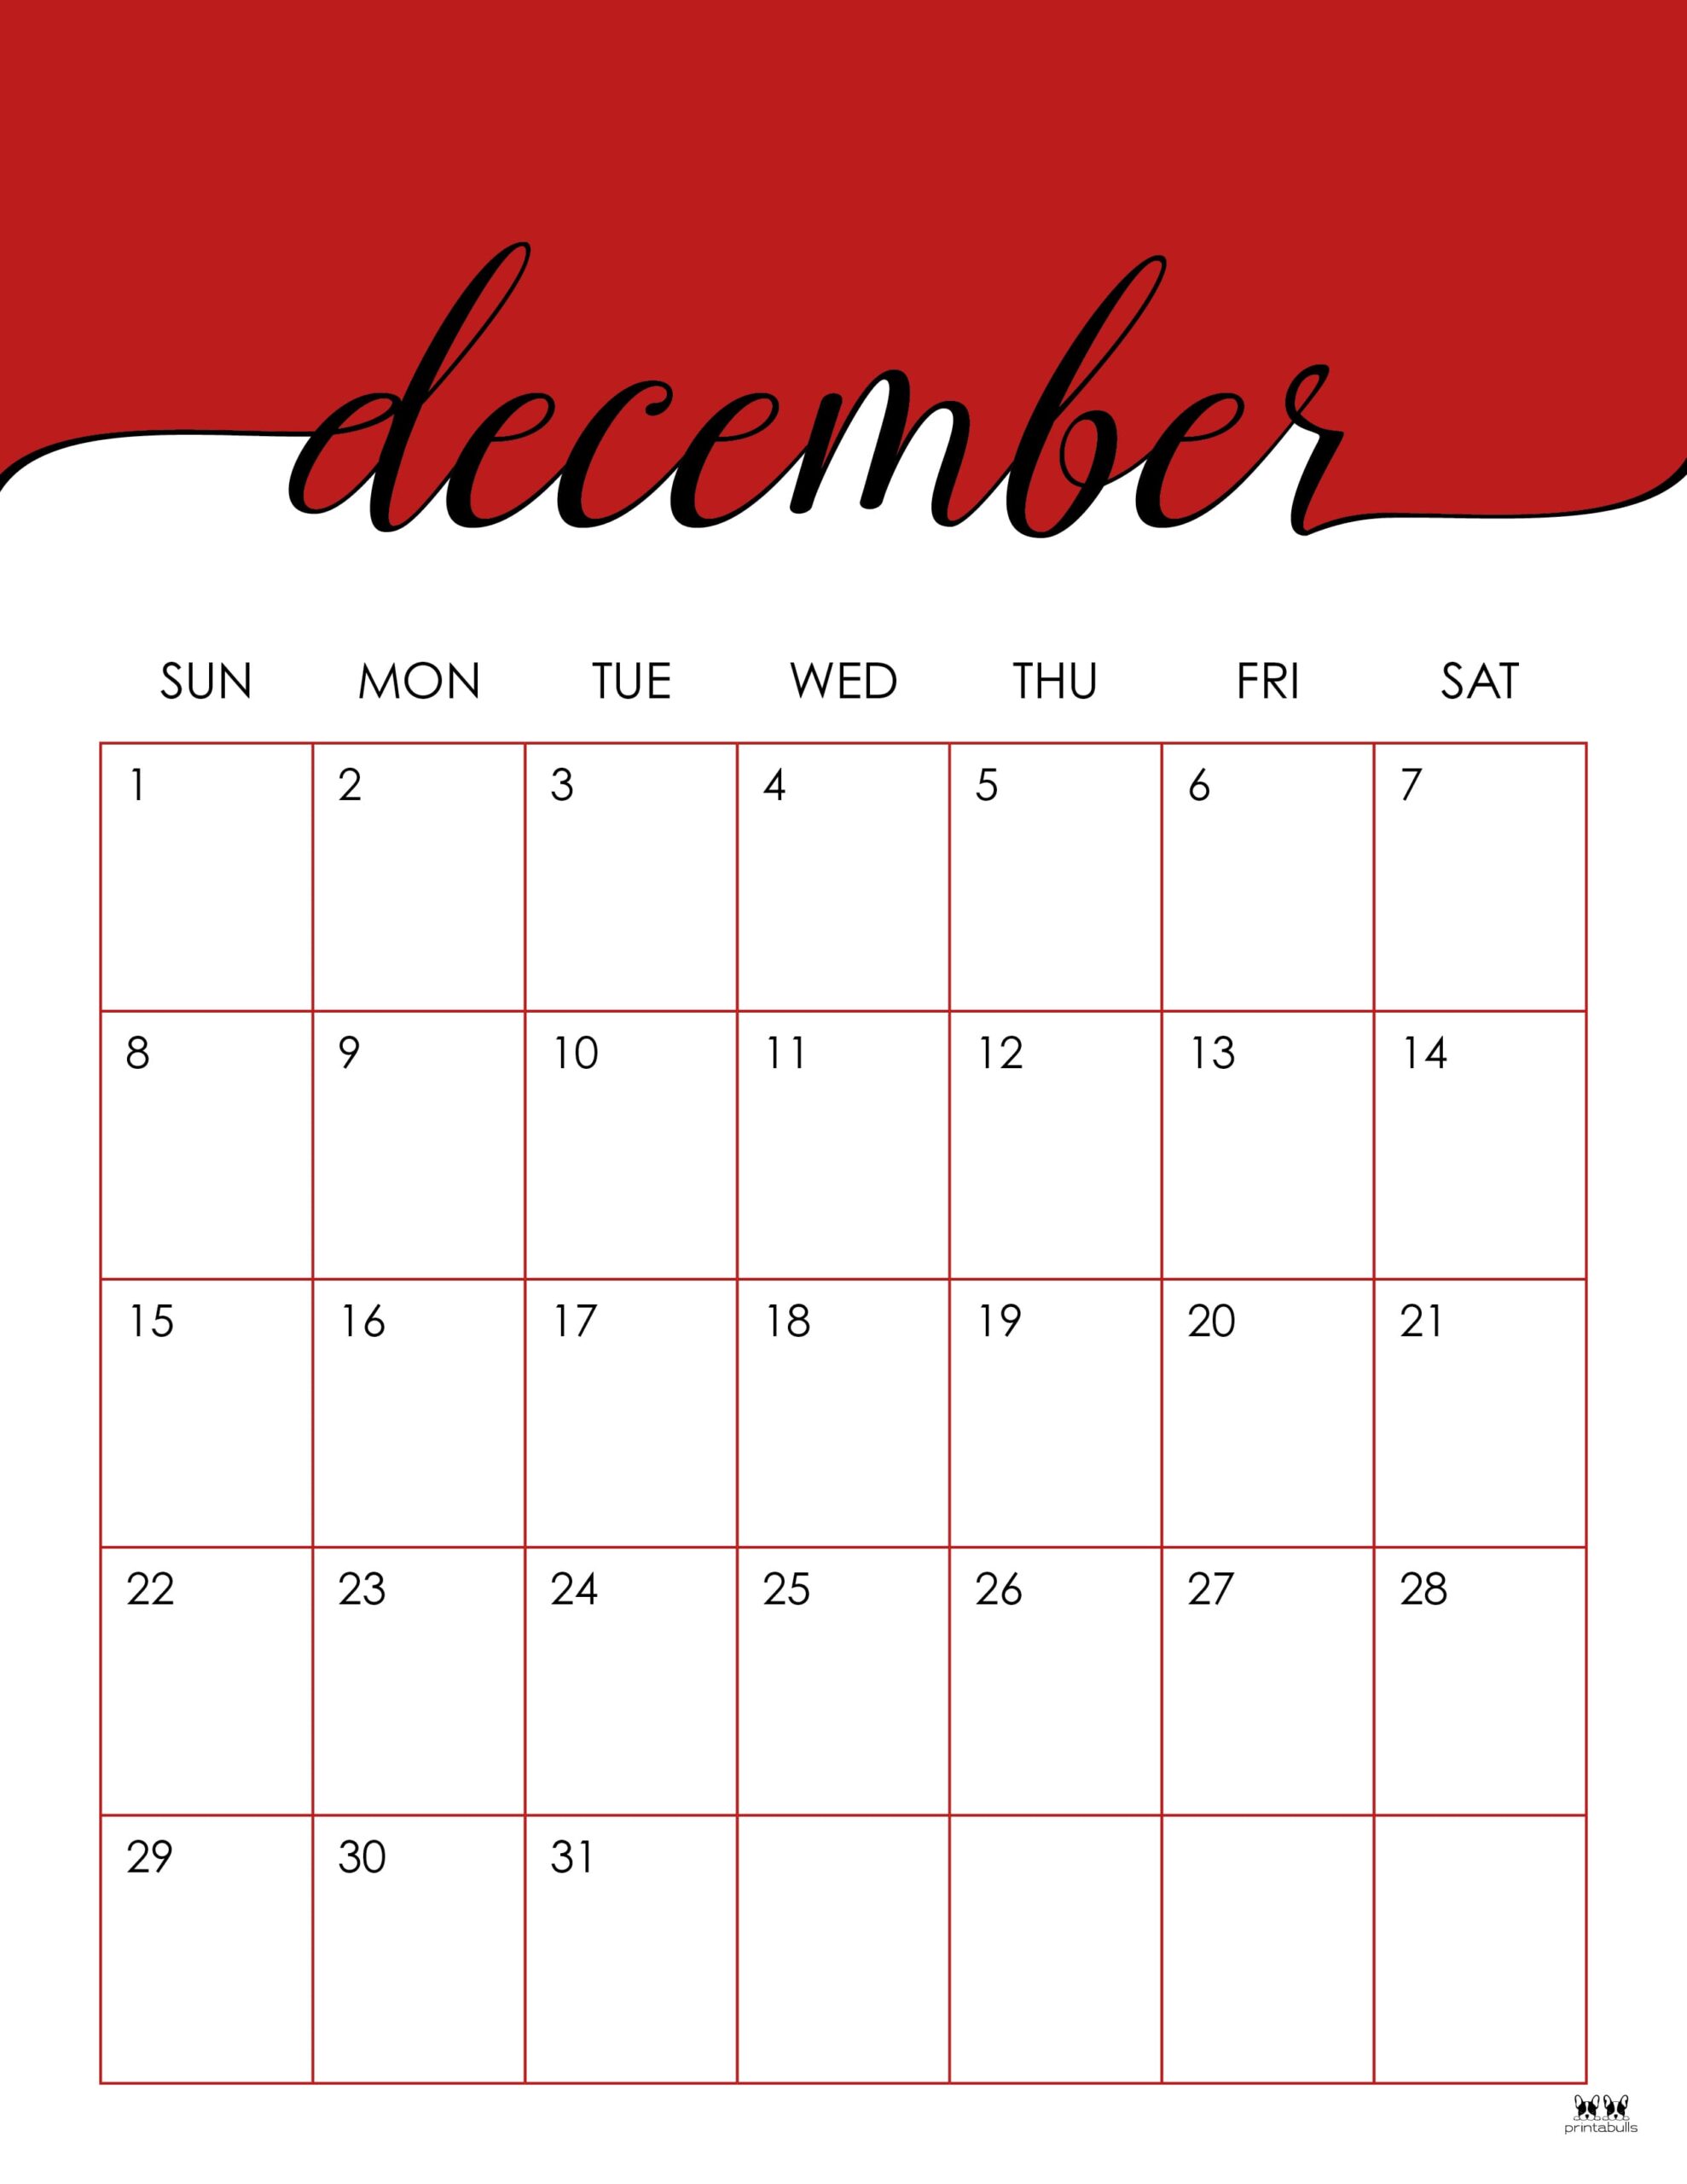 December 2024 Calendars 50 FREE Printables Printabulls